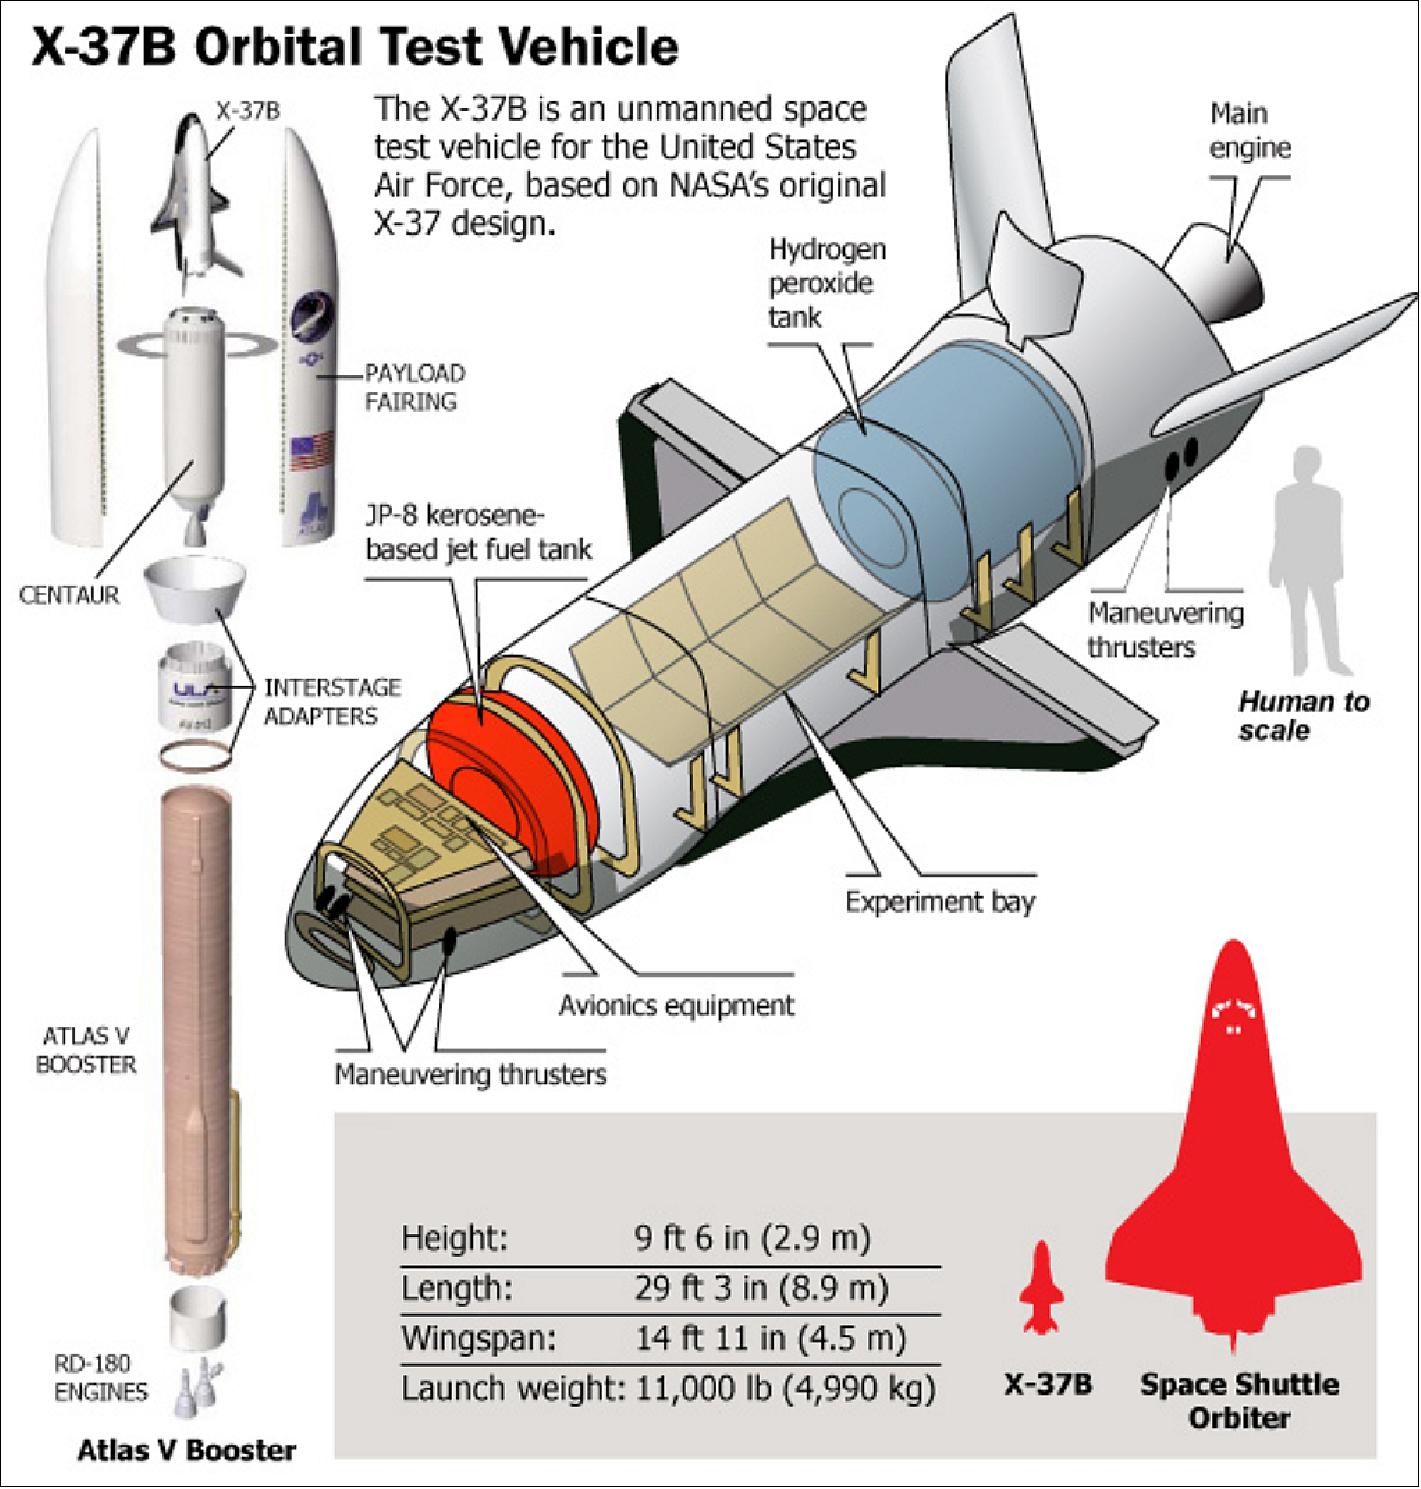 Figure 5: Illustration of the X-37B Orbital Test Vehicle elements (image credit: NASA, ULA) 9)